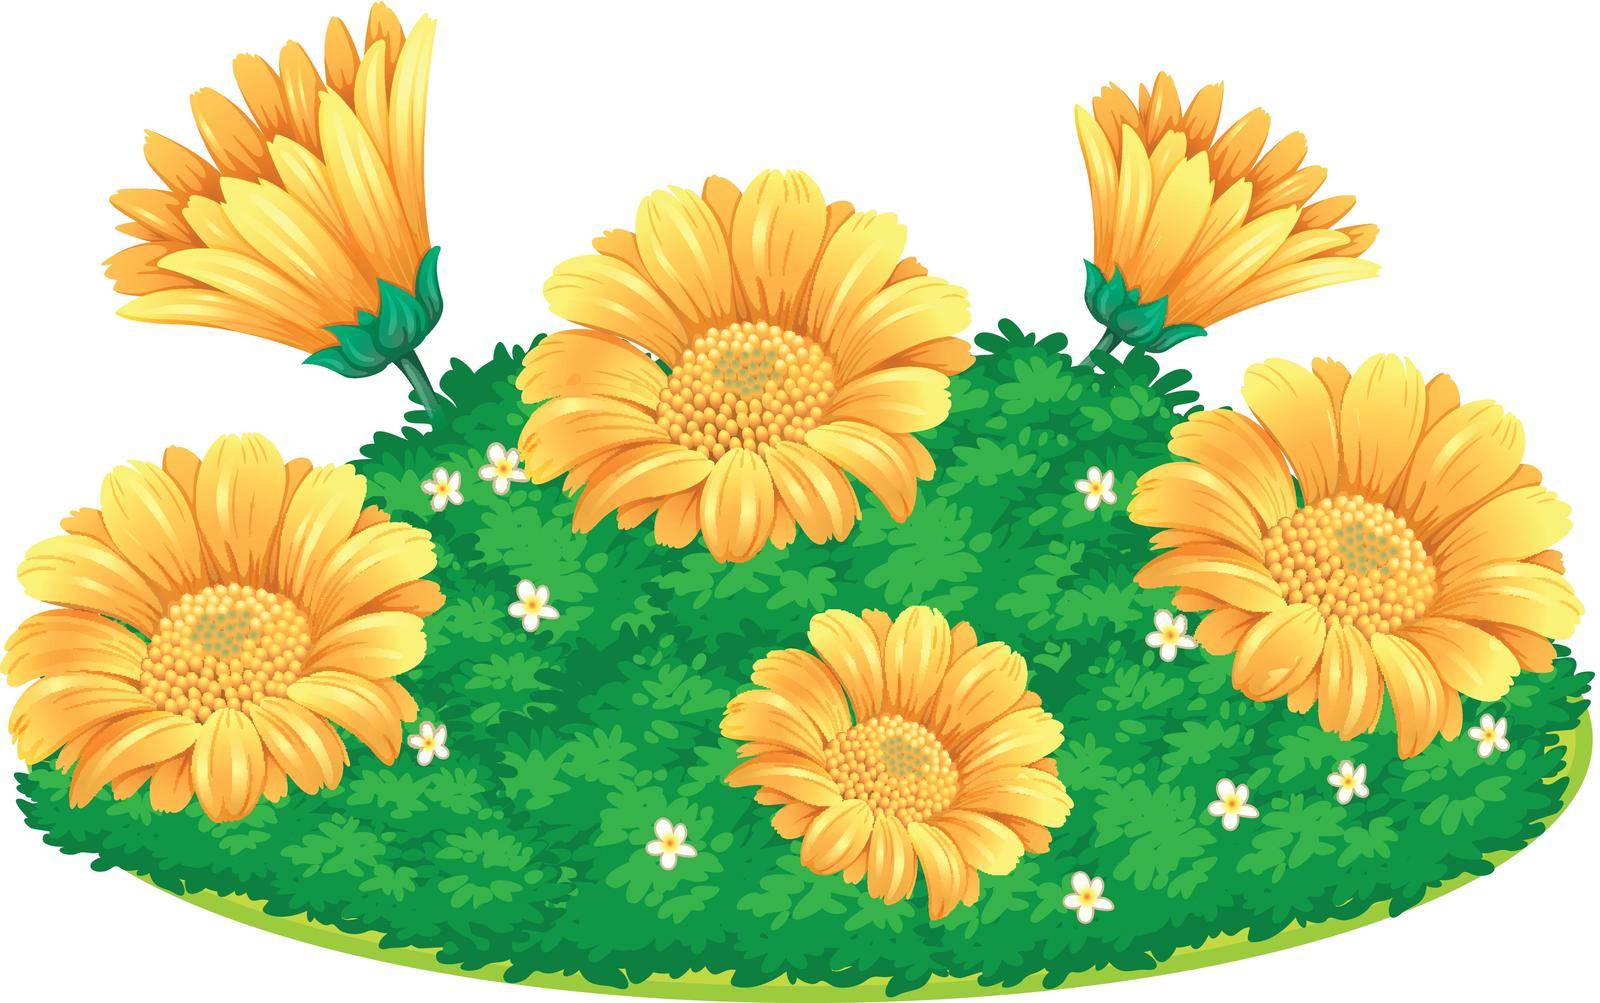 Calendular flowers in bush illustration